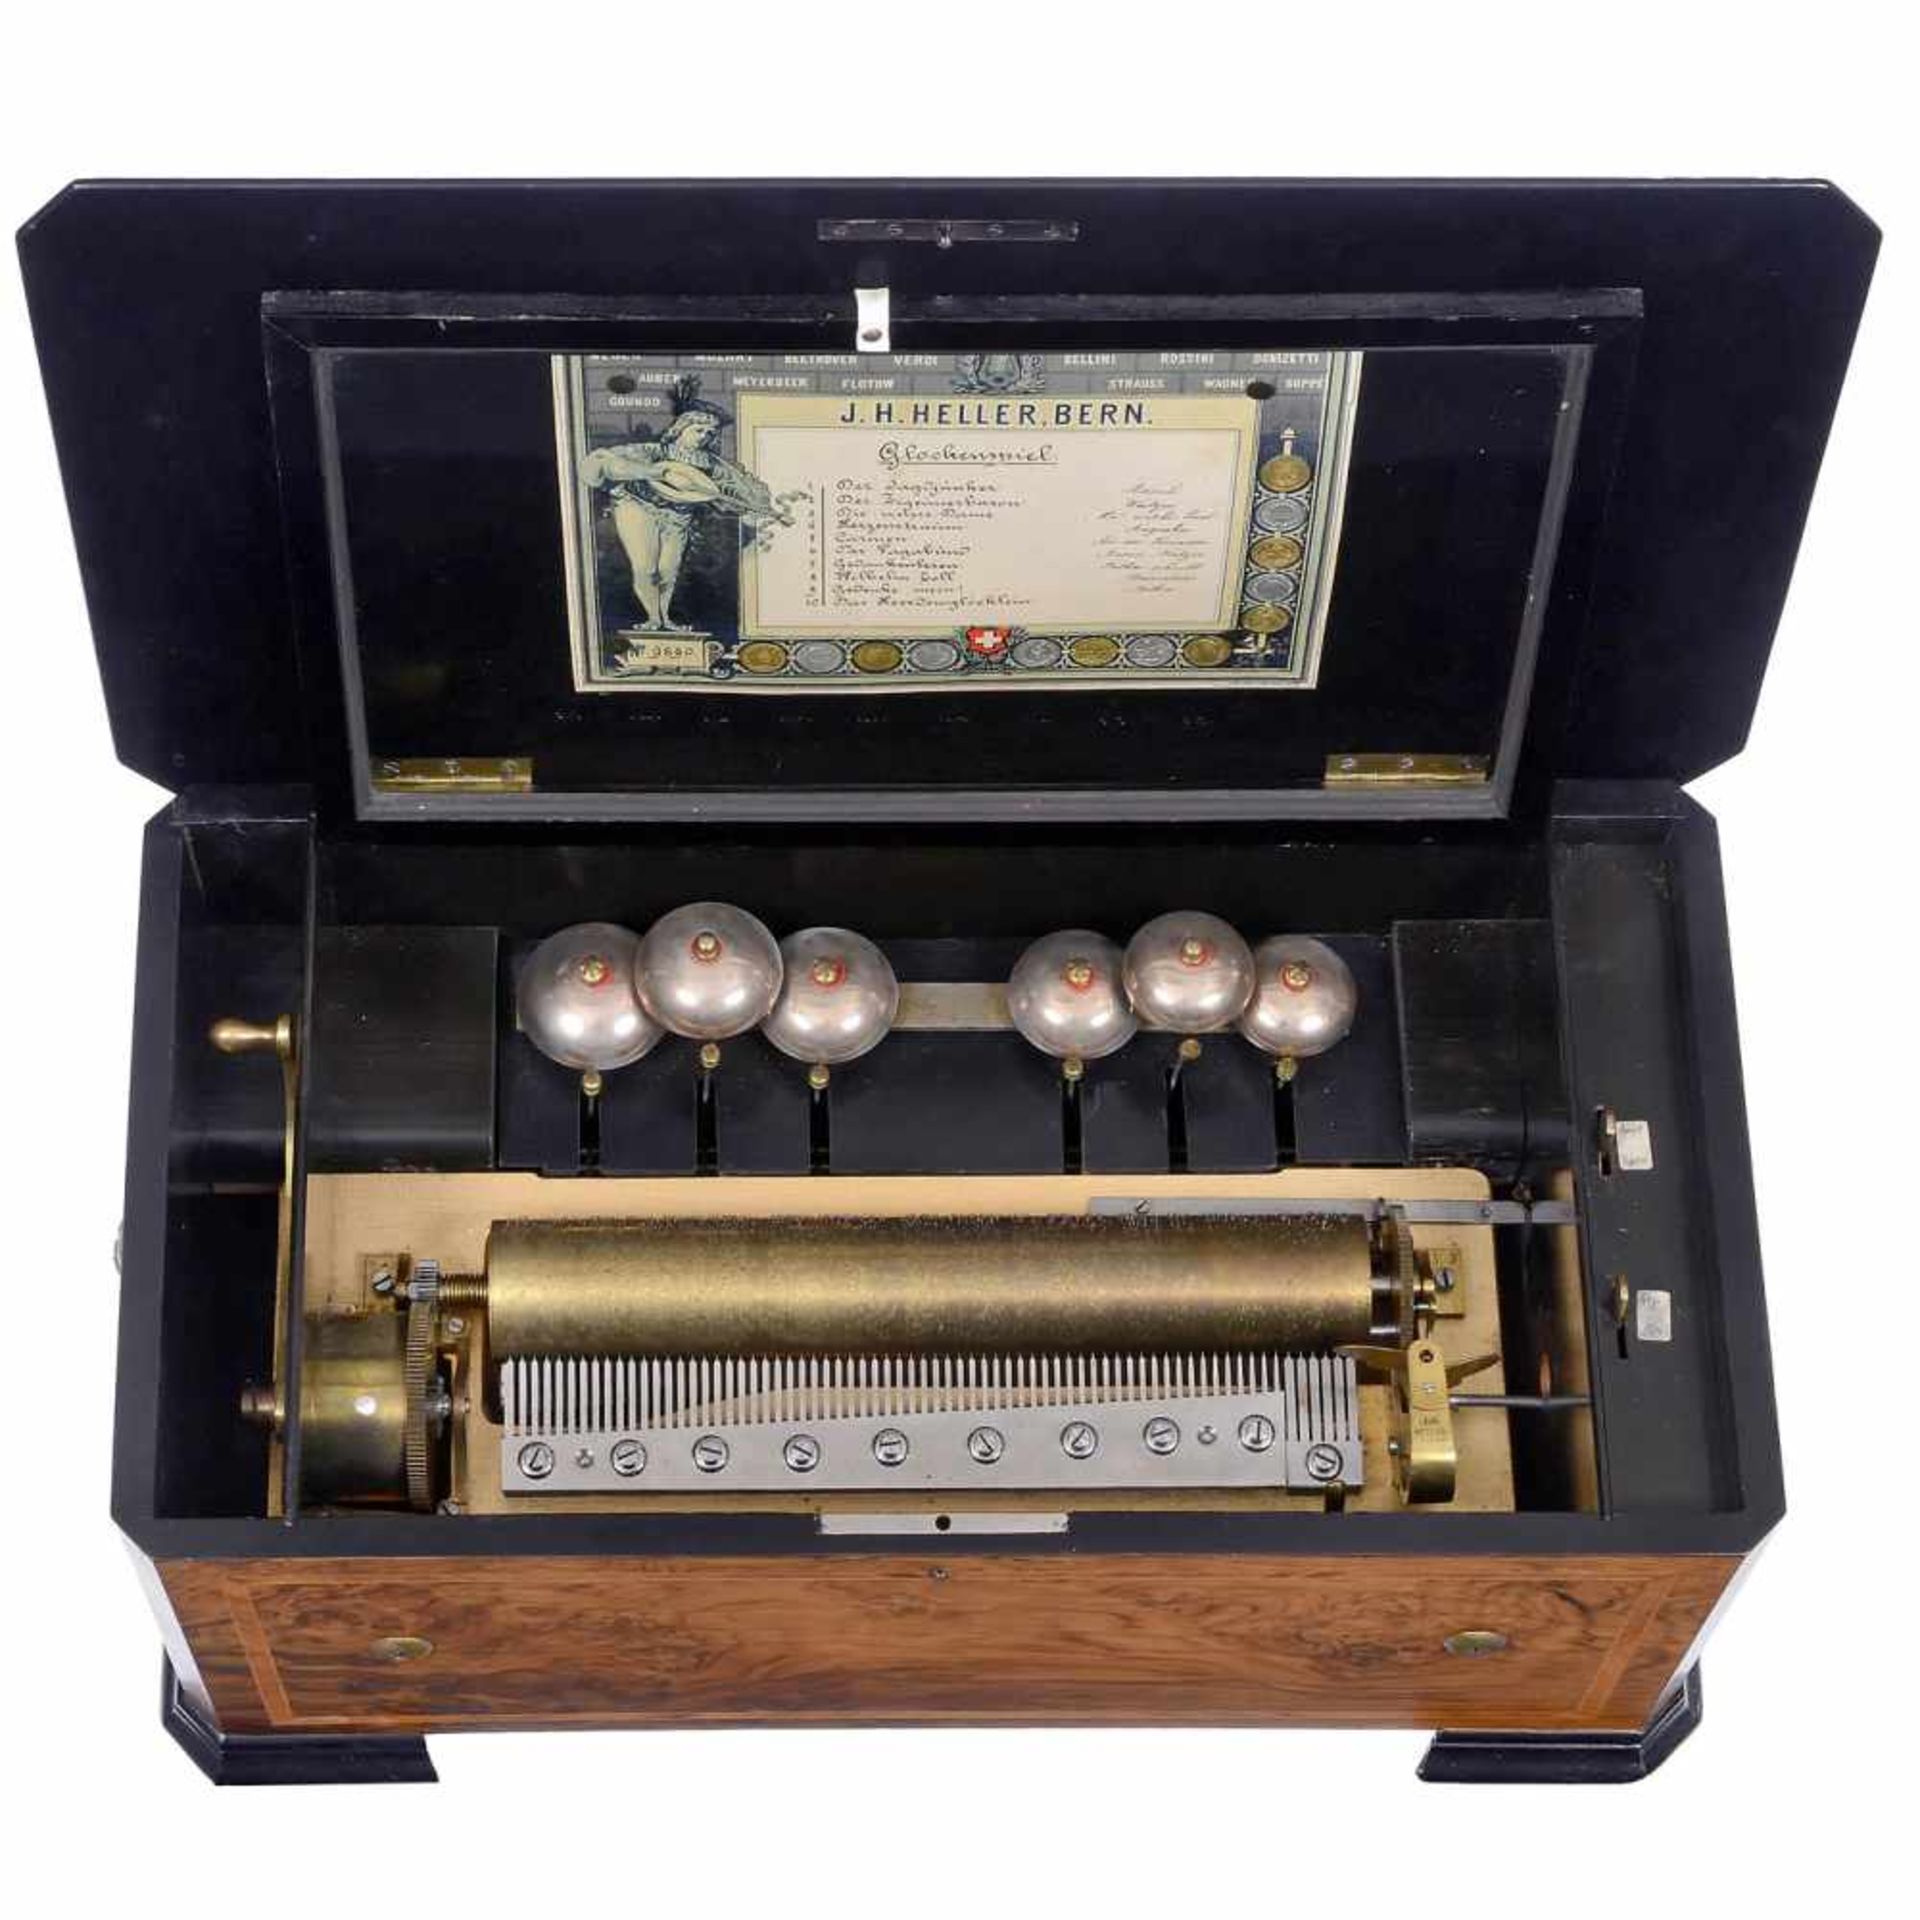 "Glockenspiel" Musical Box by J.H. Heller, c. 1895J.H. Heller, Bern, Switzerland. No. 9890,